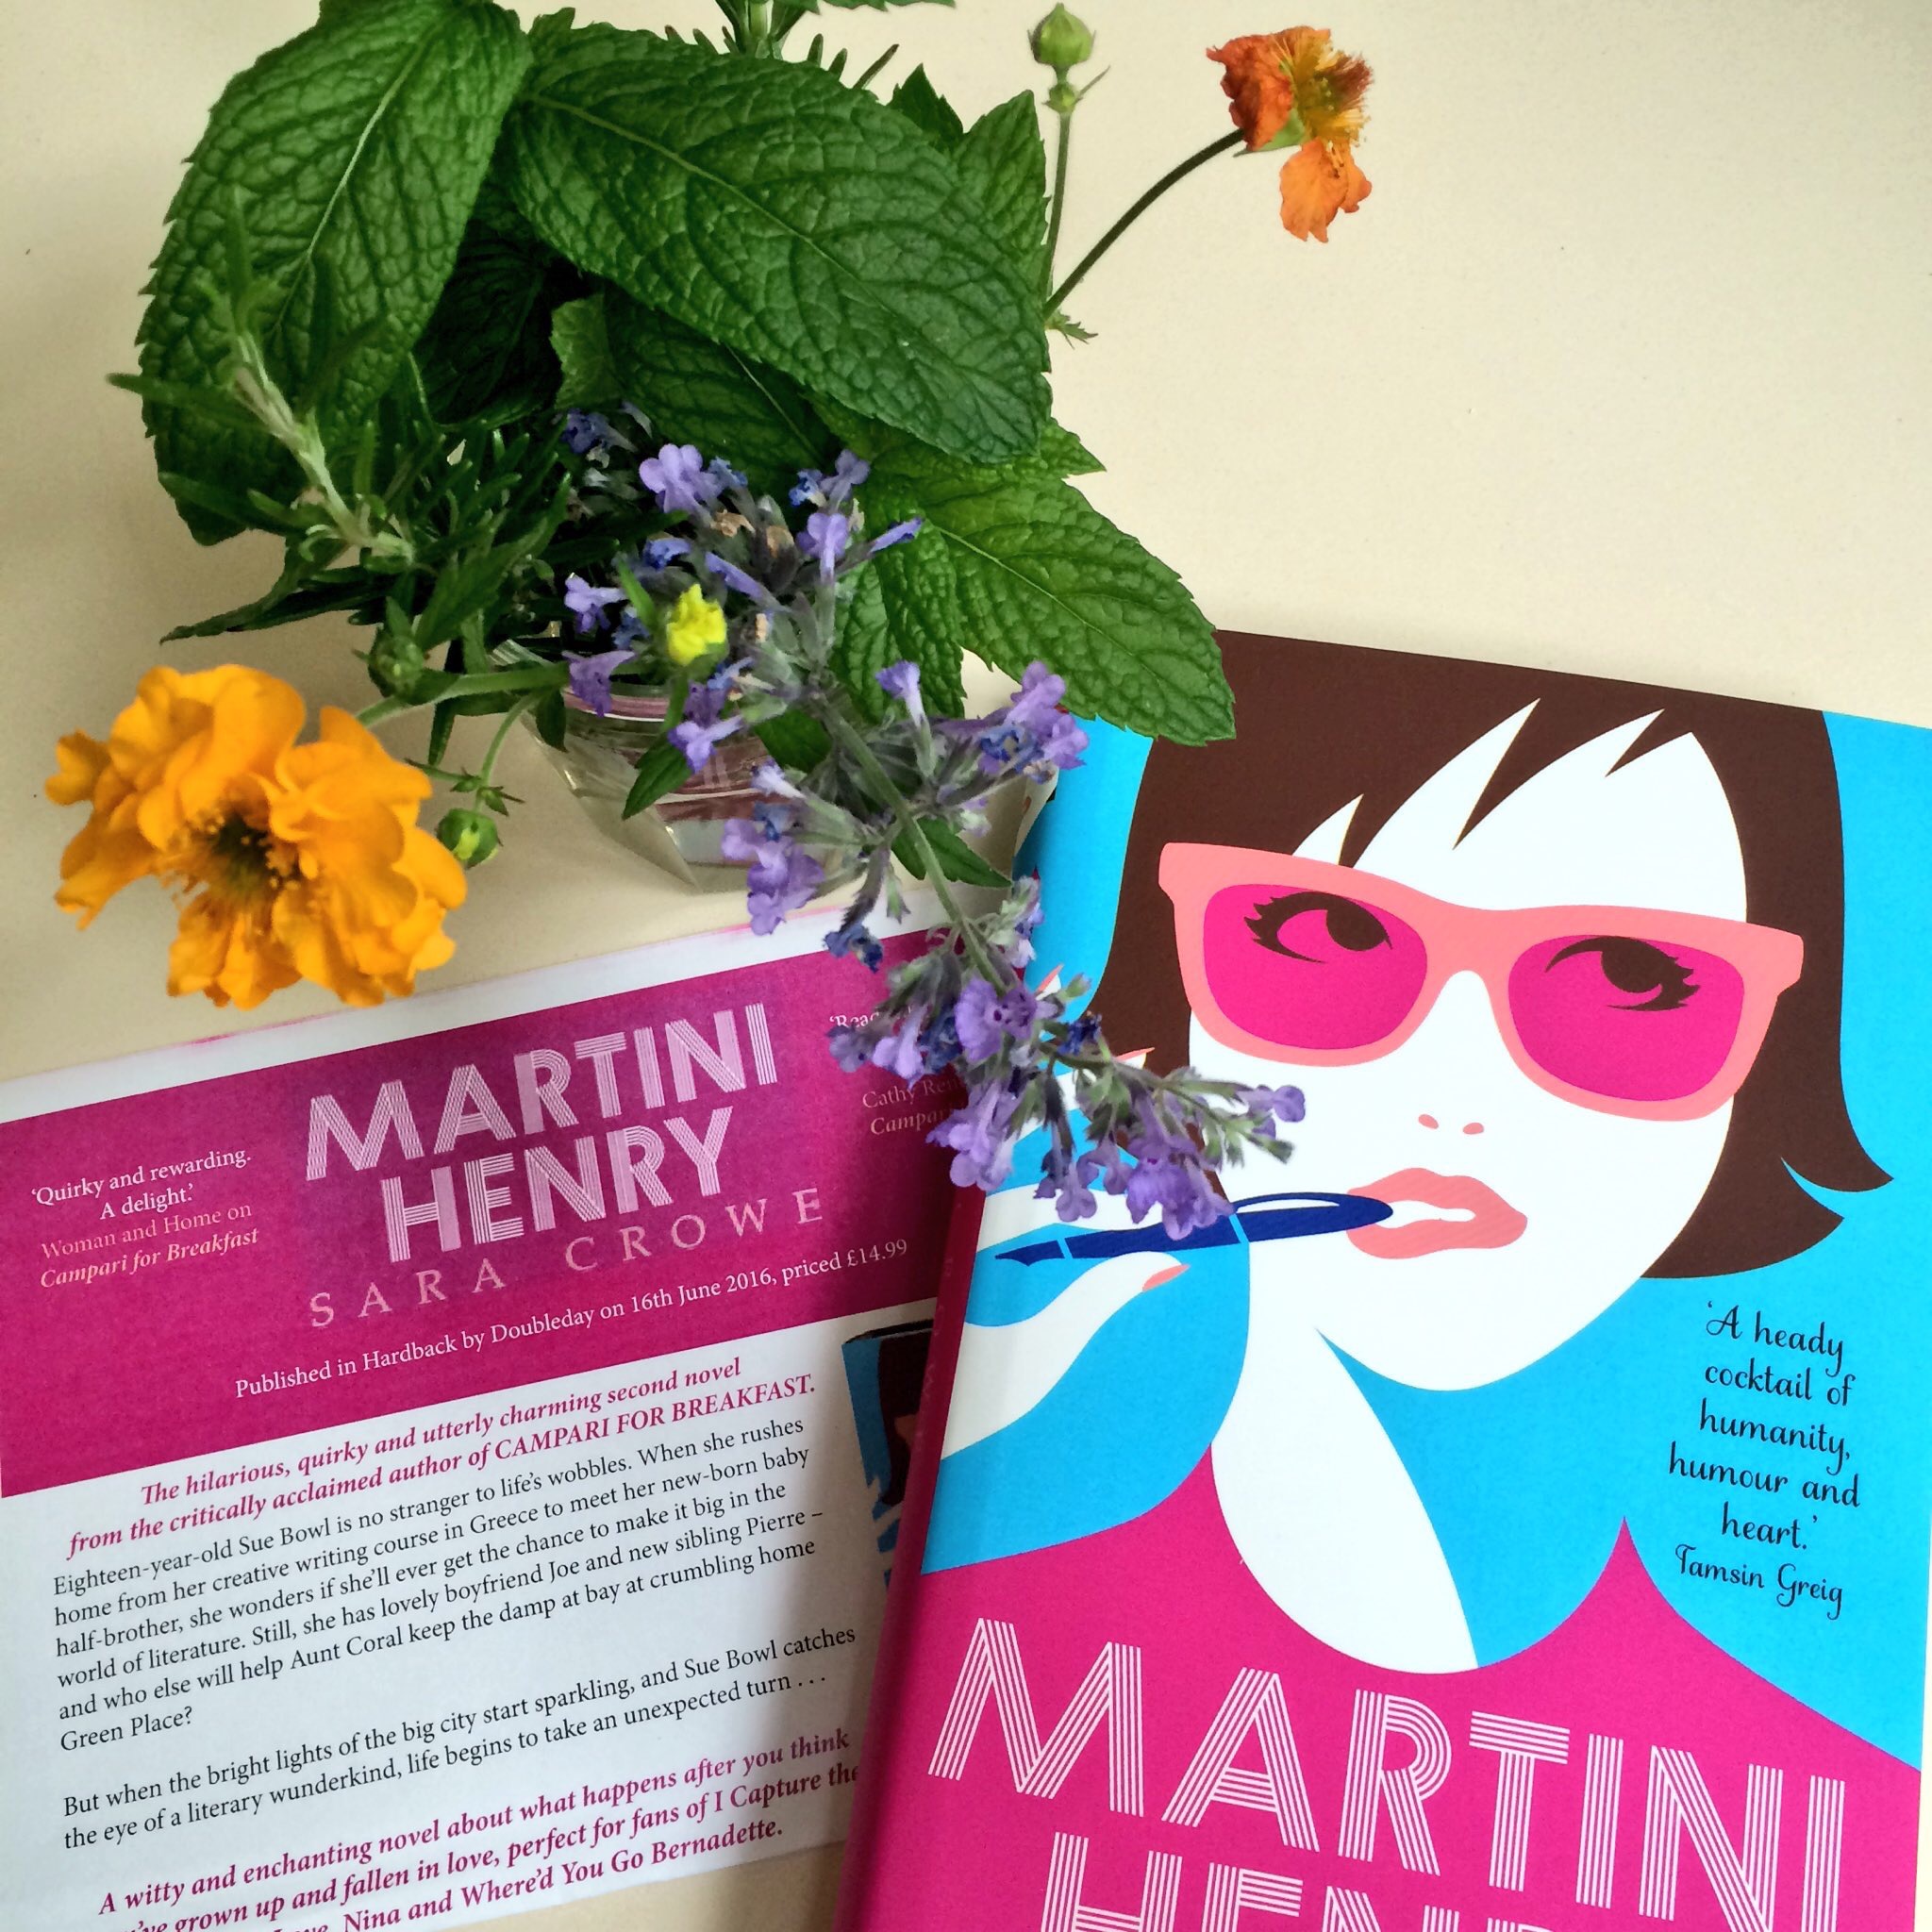 Martini Henry